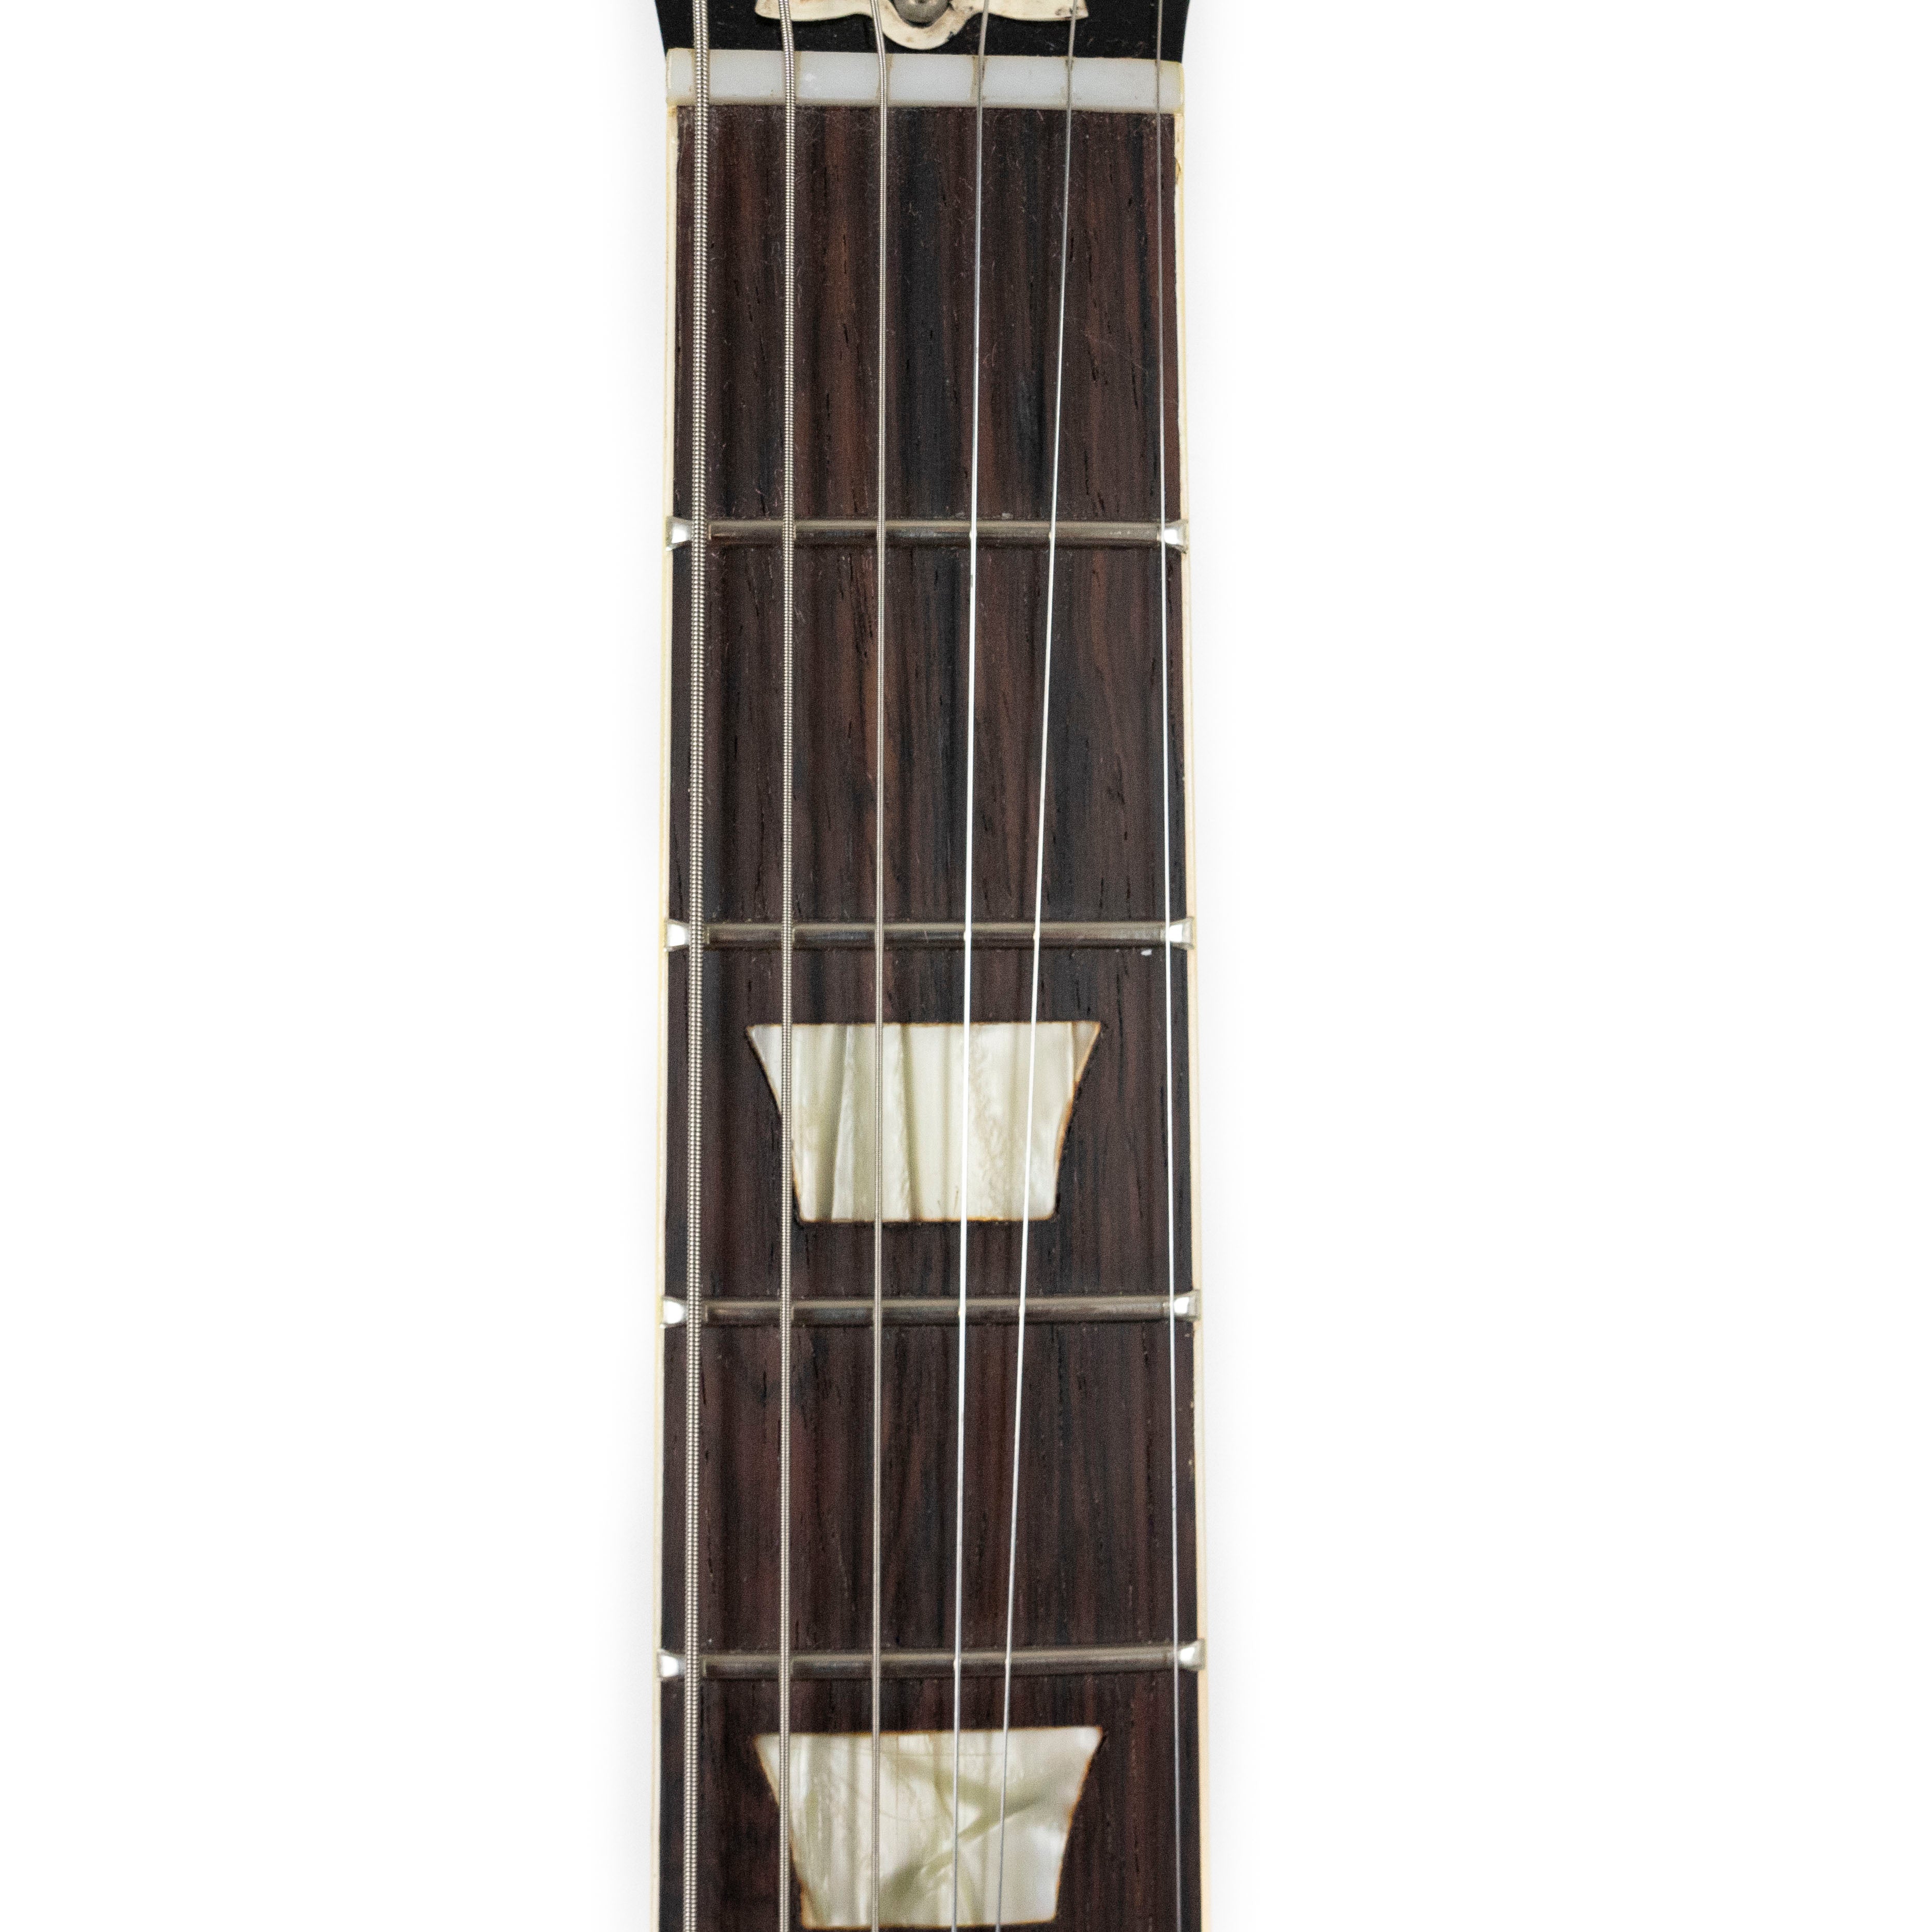 Gibson 1960 Les Paul "SG" Standard Refinished Pelham Blue